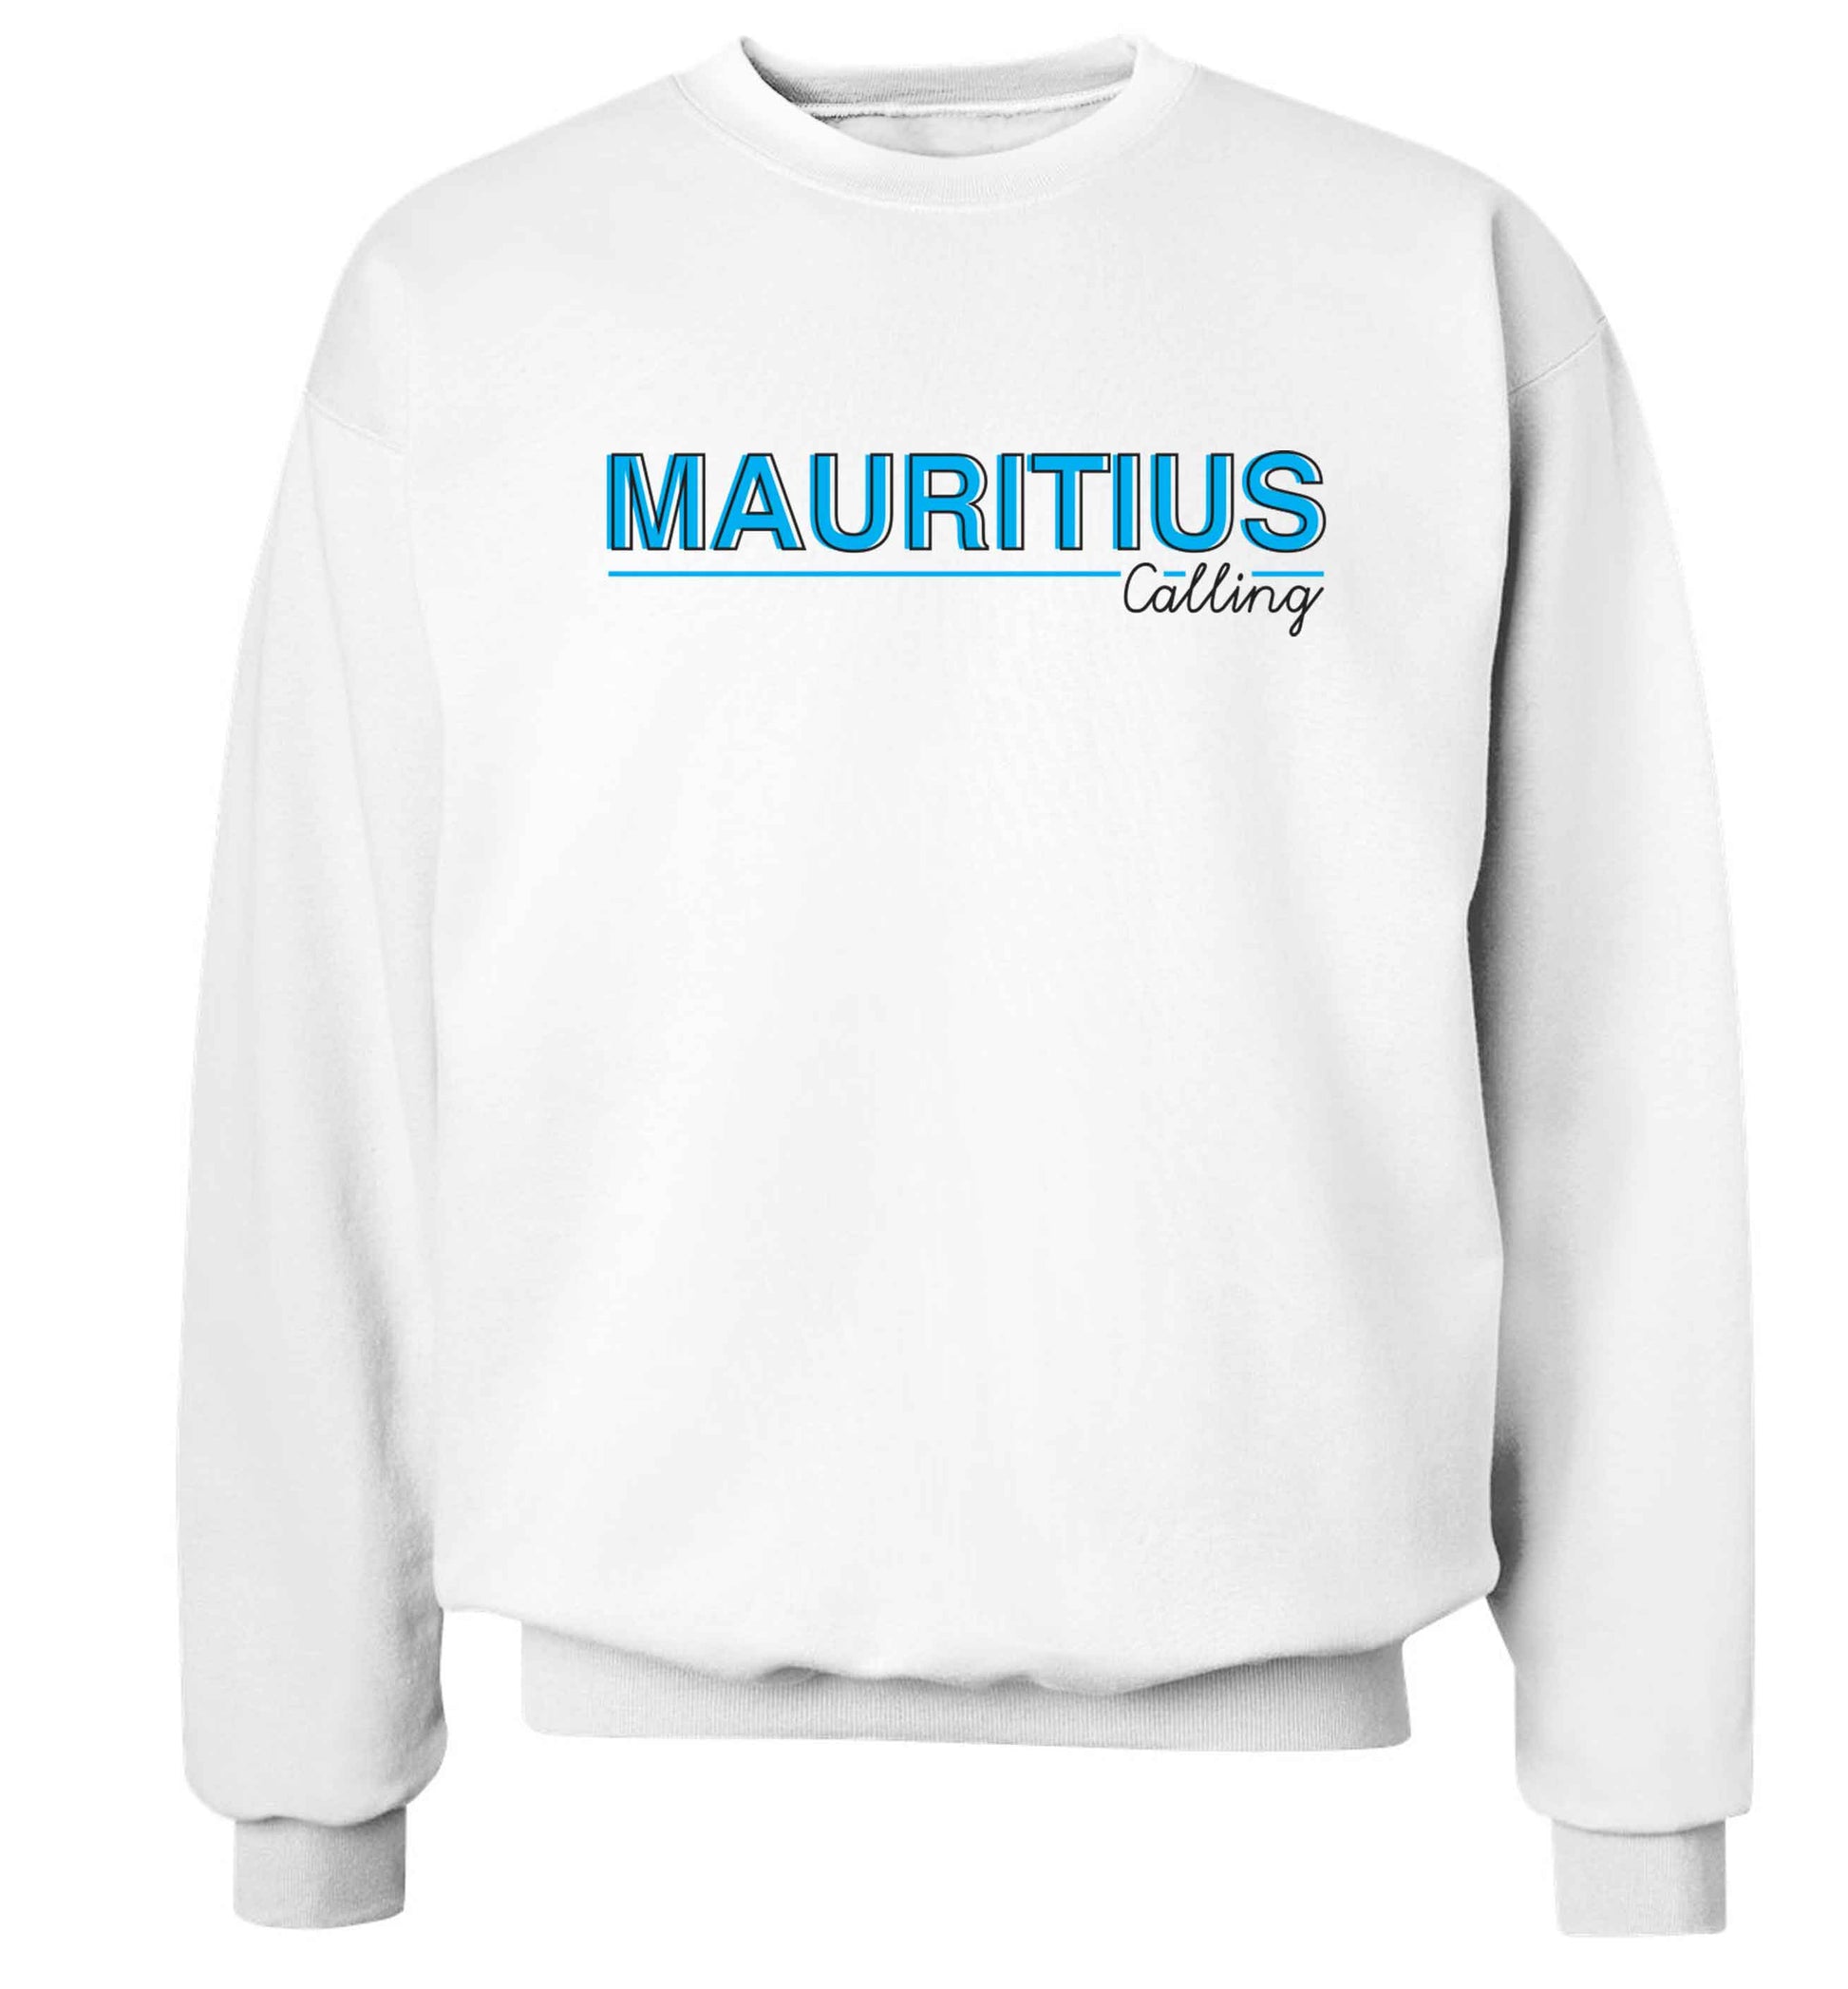 Mauritius calling Adult's unisex white Sweater 2XL